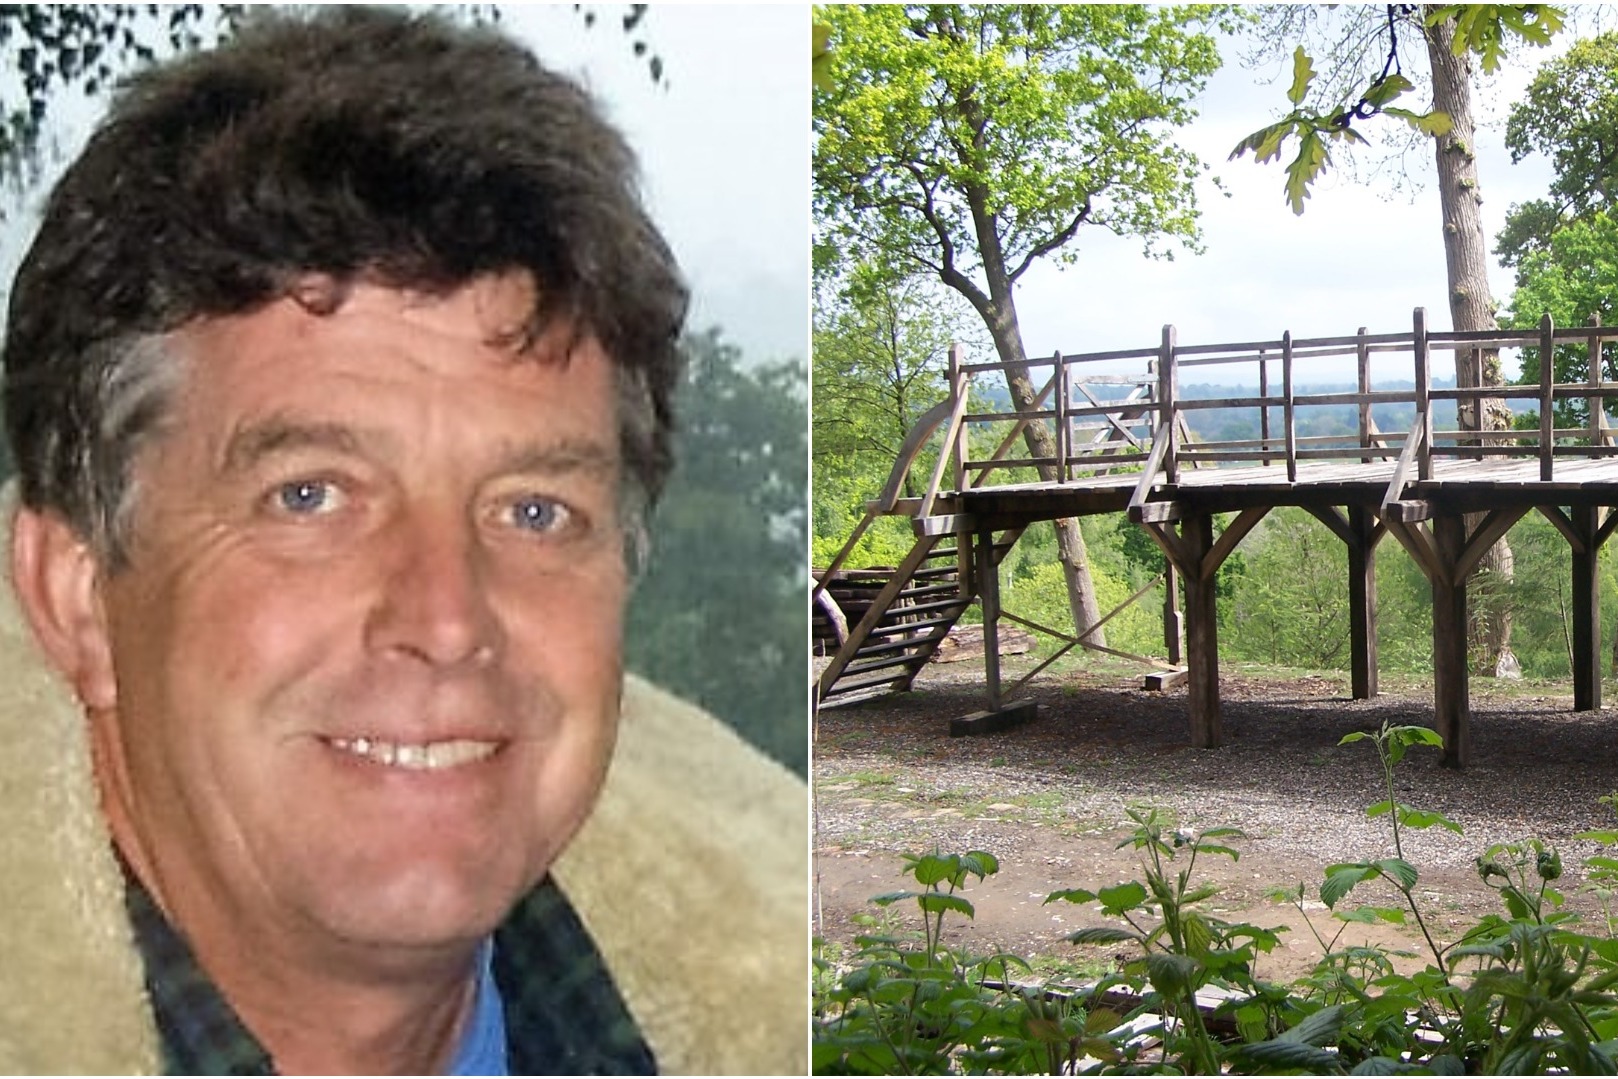 Kent carpenter wants to sell Poohstick Bridge to Disney